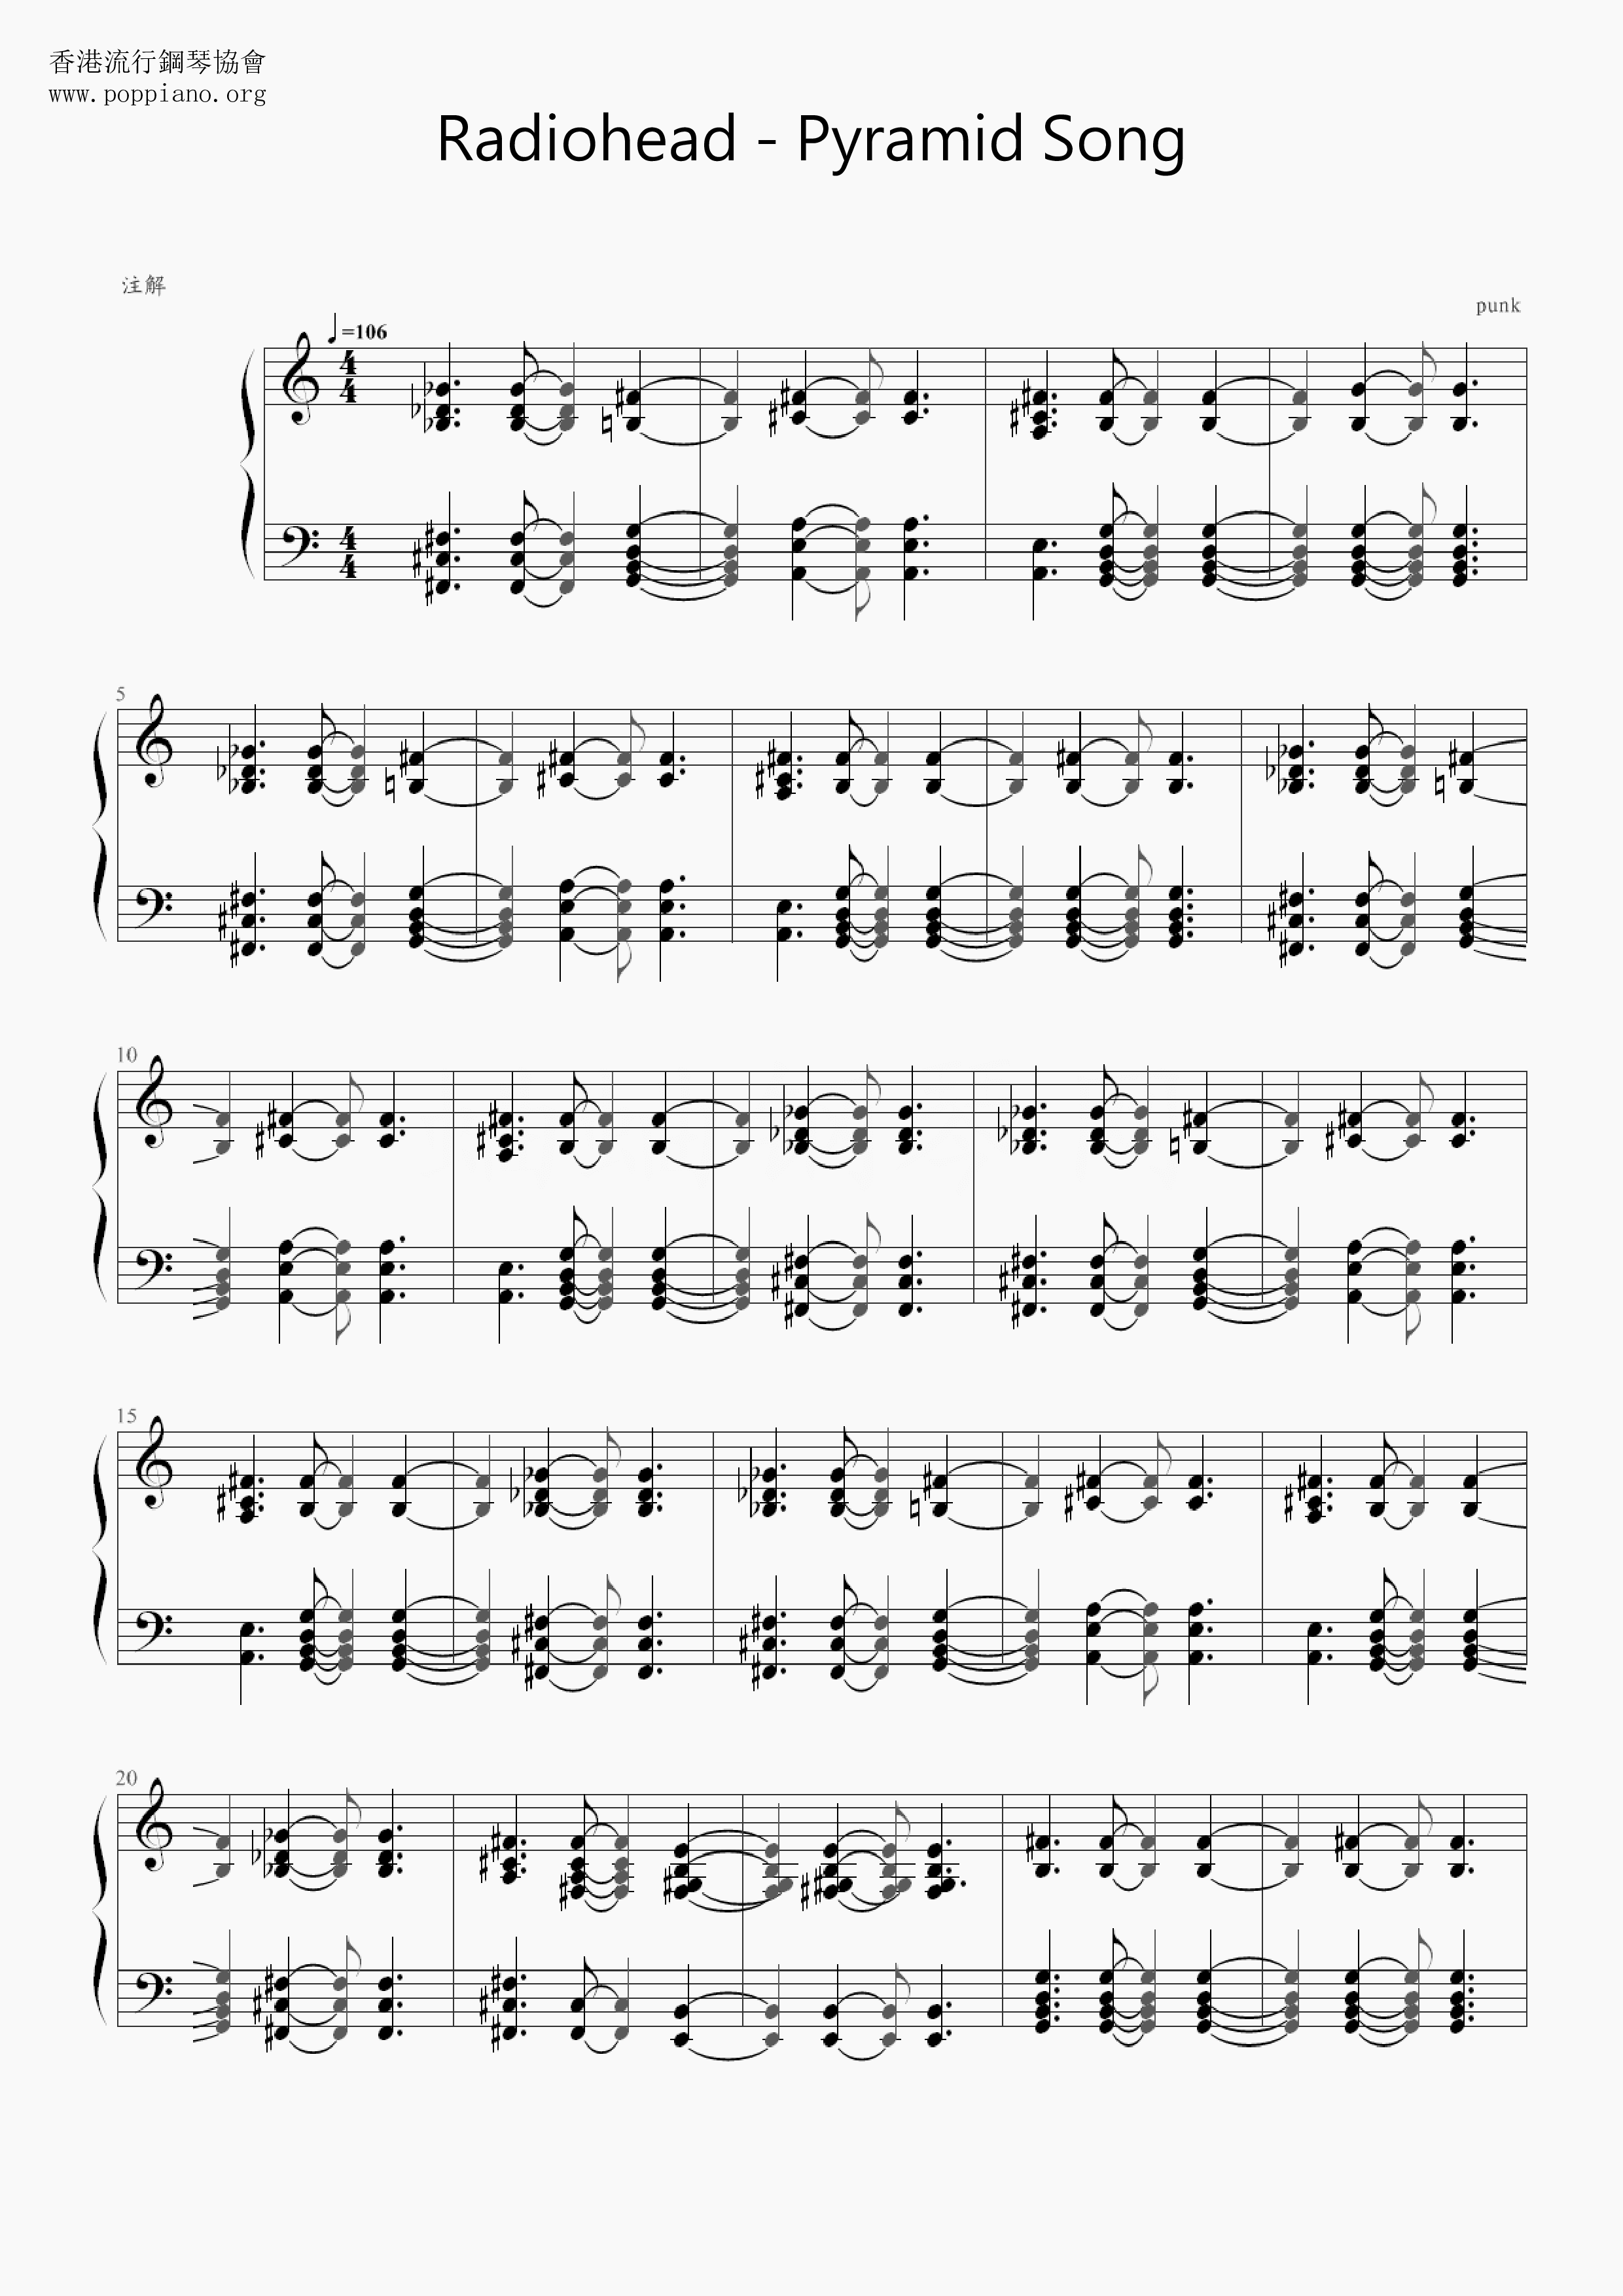 Pyramid Song Score